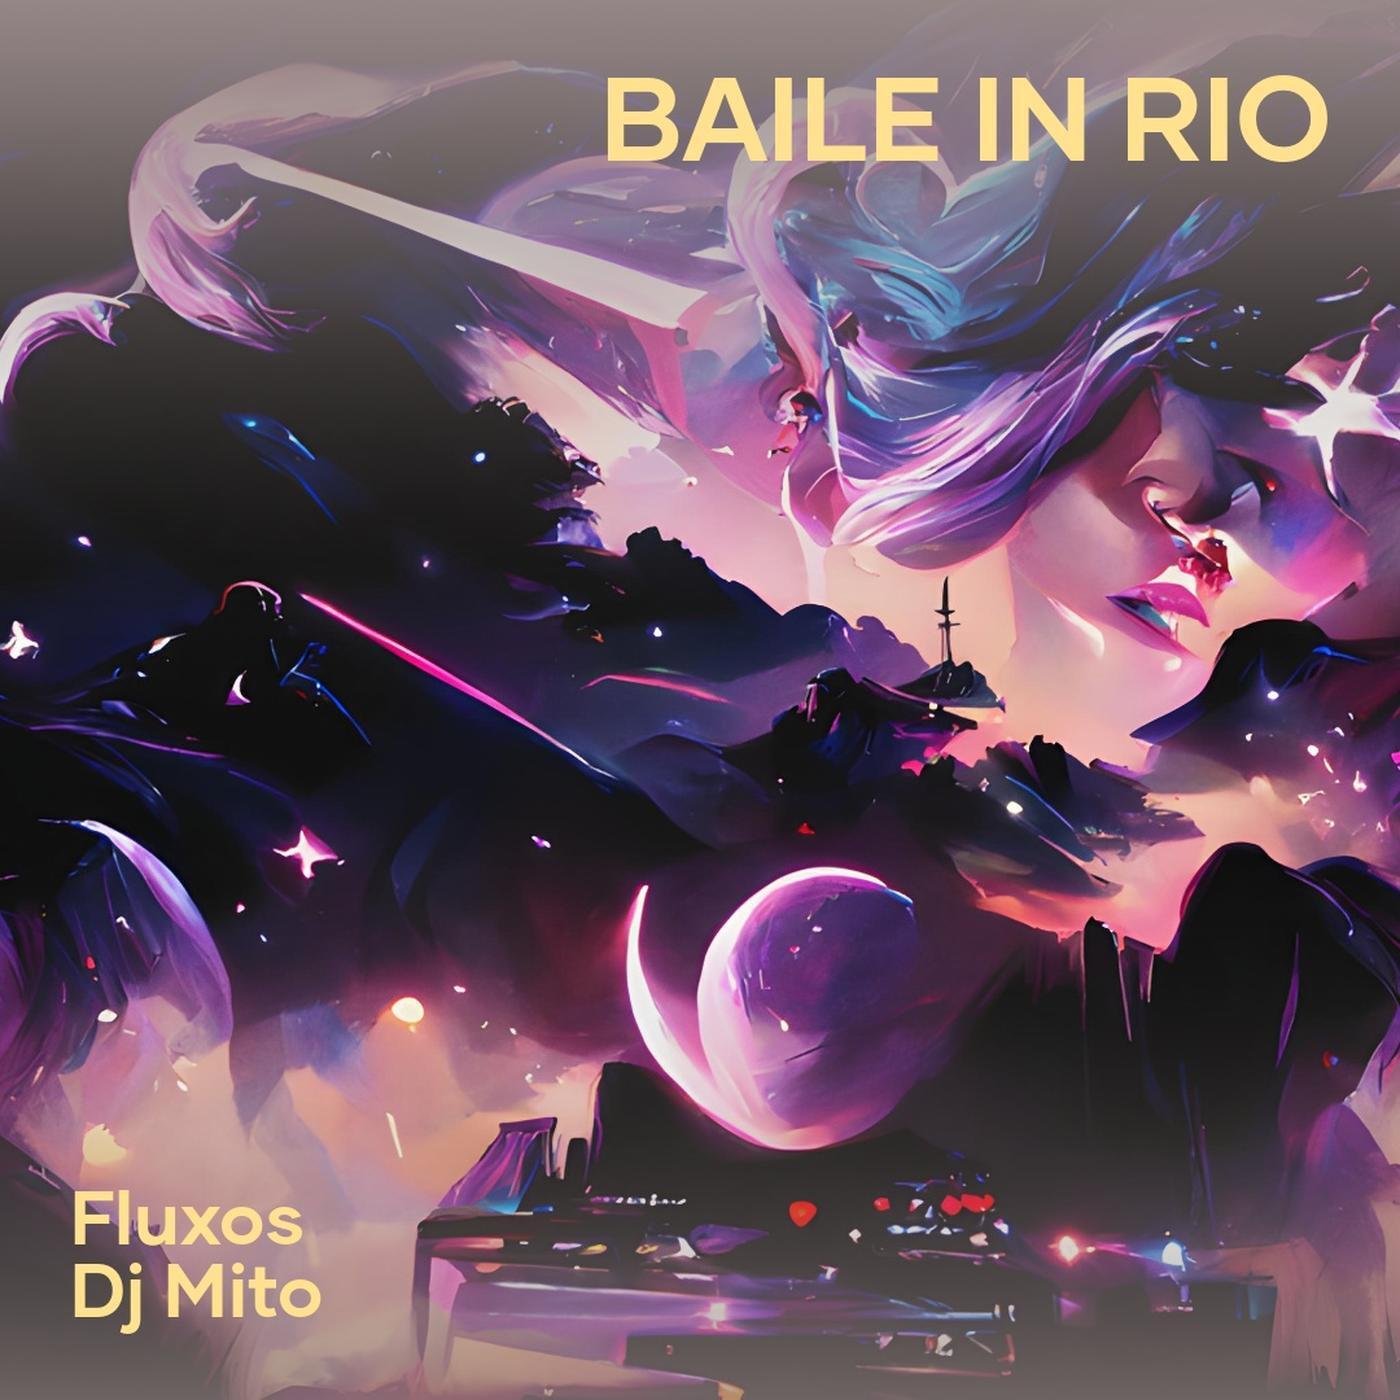 FLUXOS - Baile in Rio